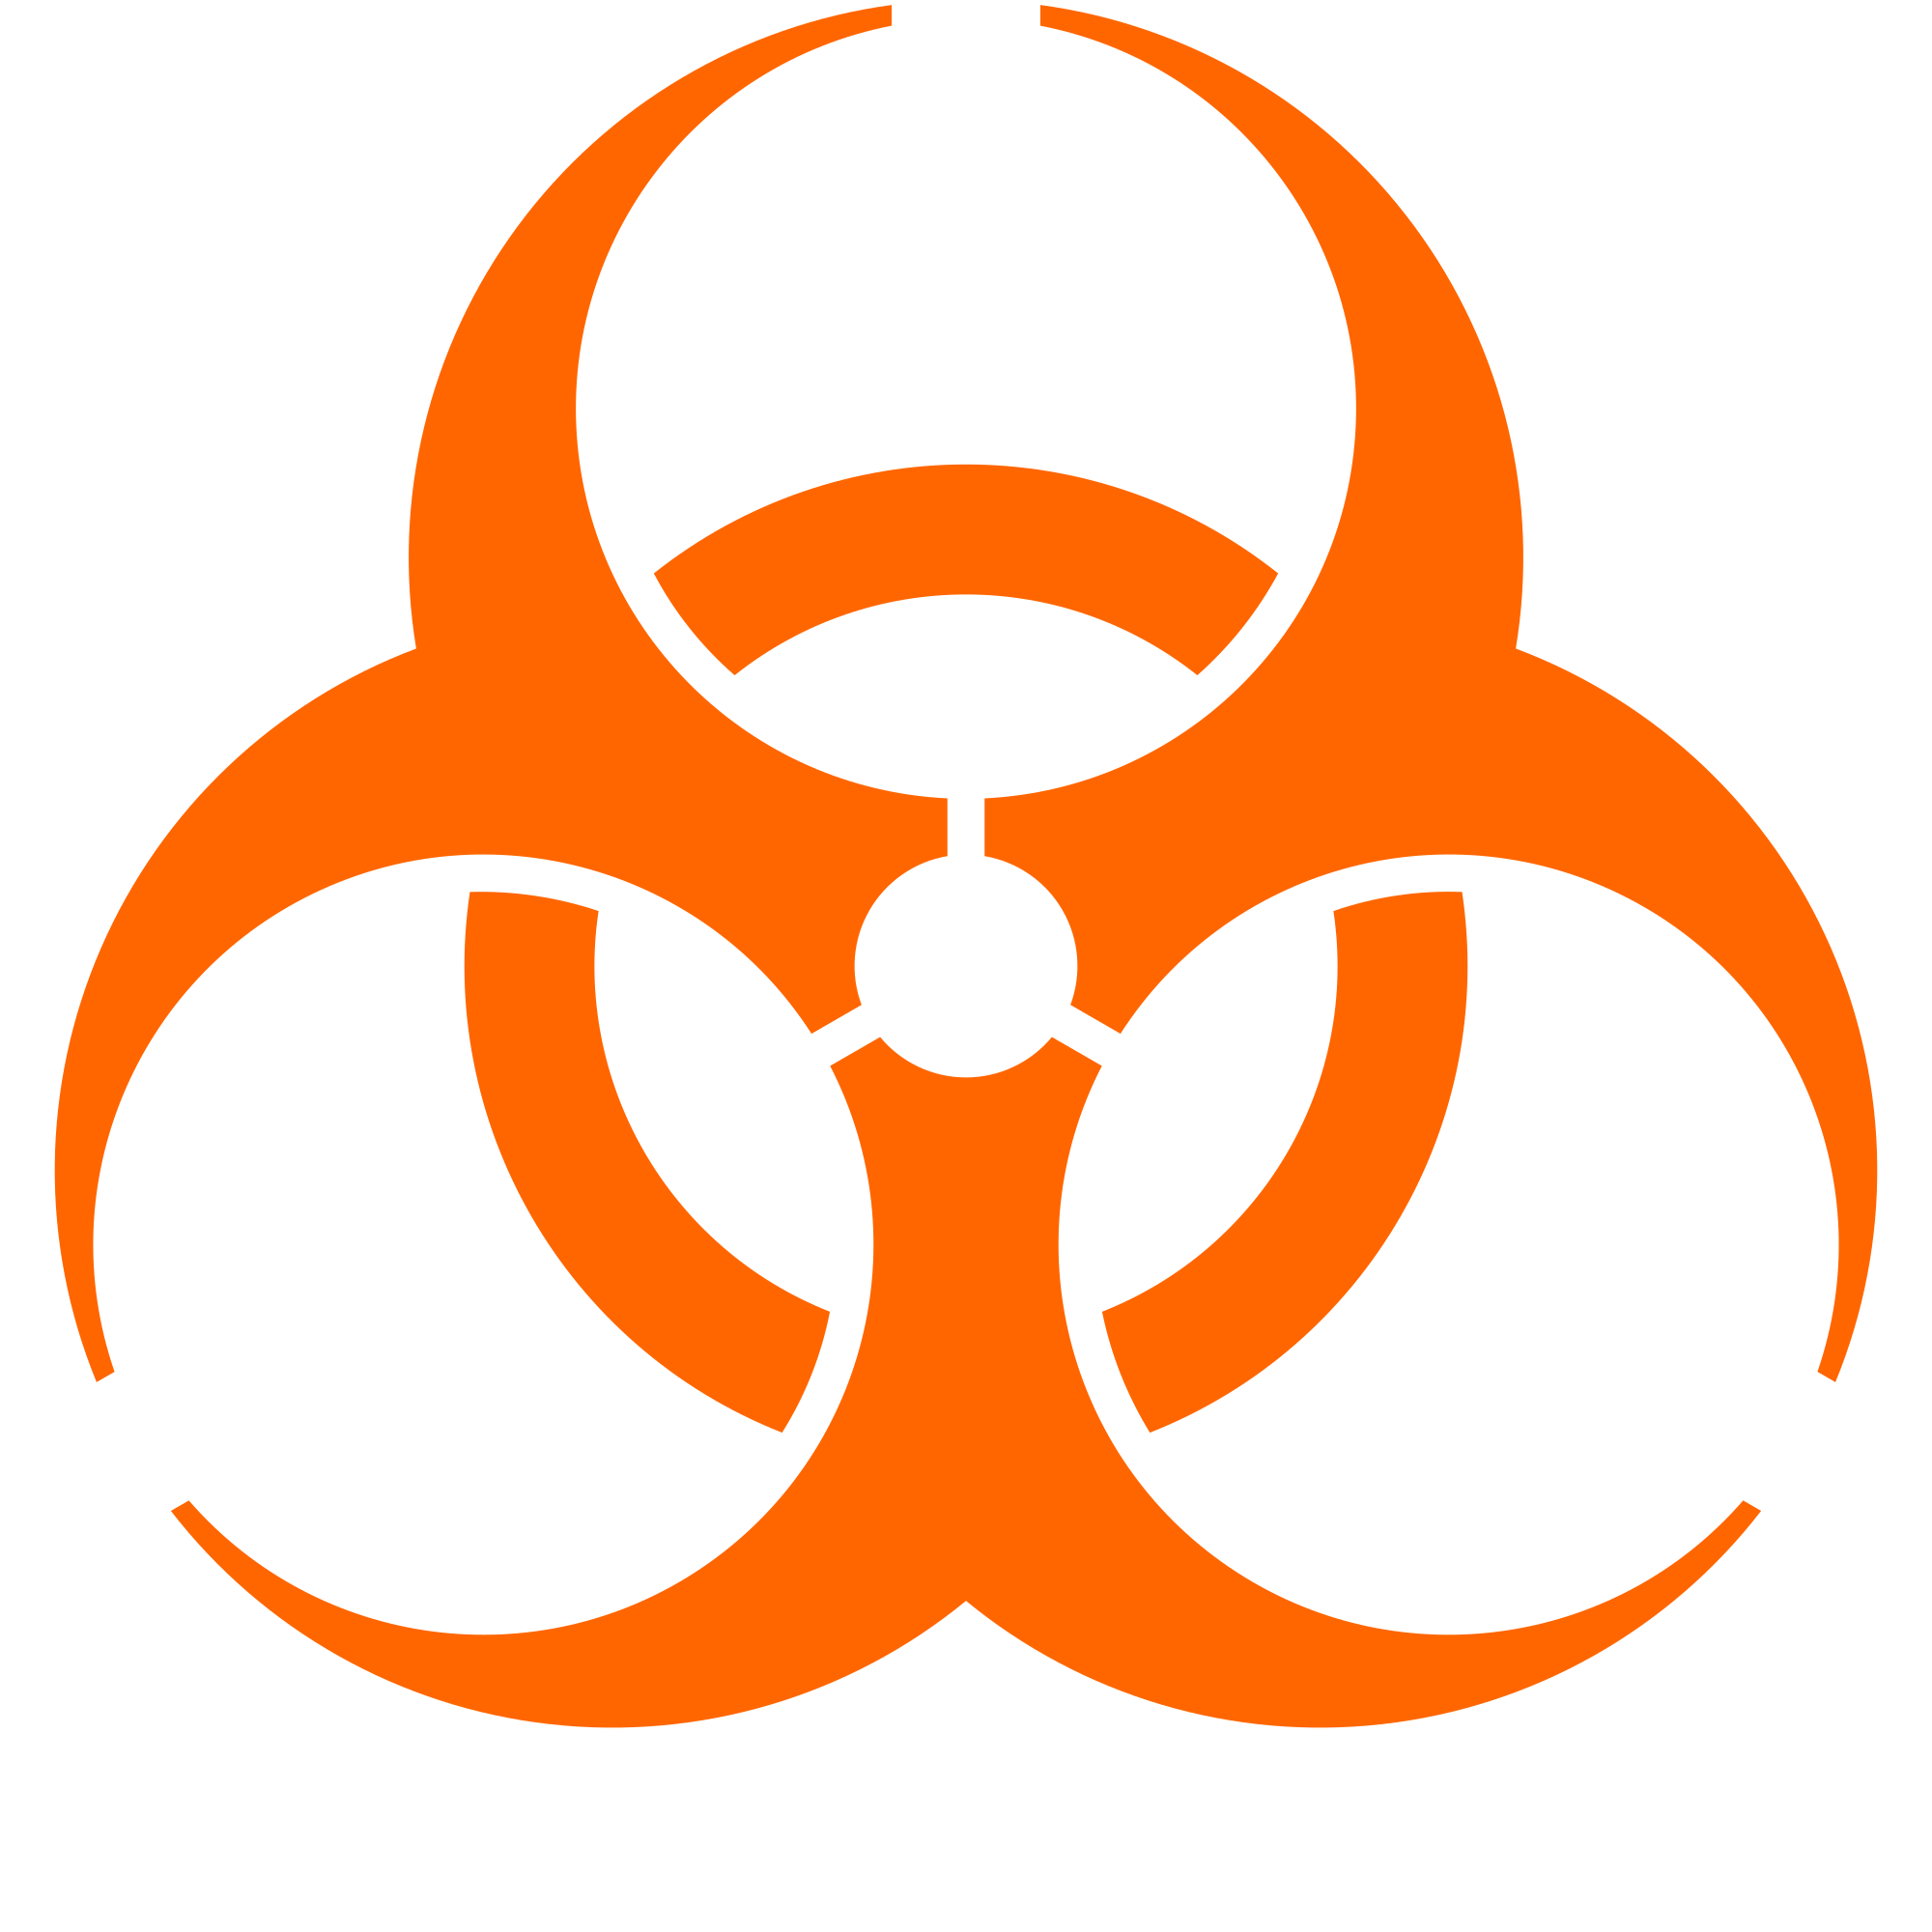 File:Biohazard symbol (orange).svg - Wikimedia Commons